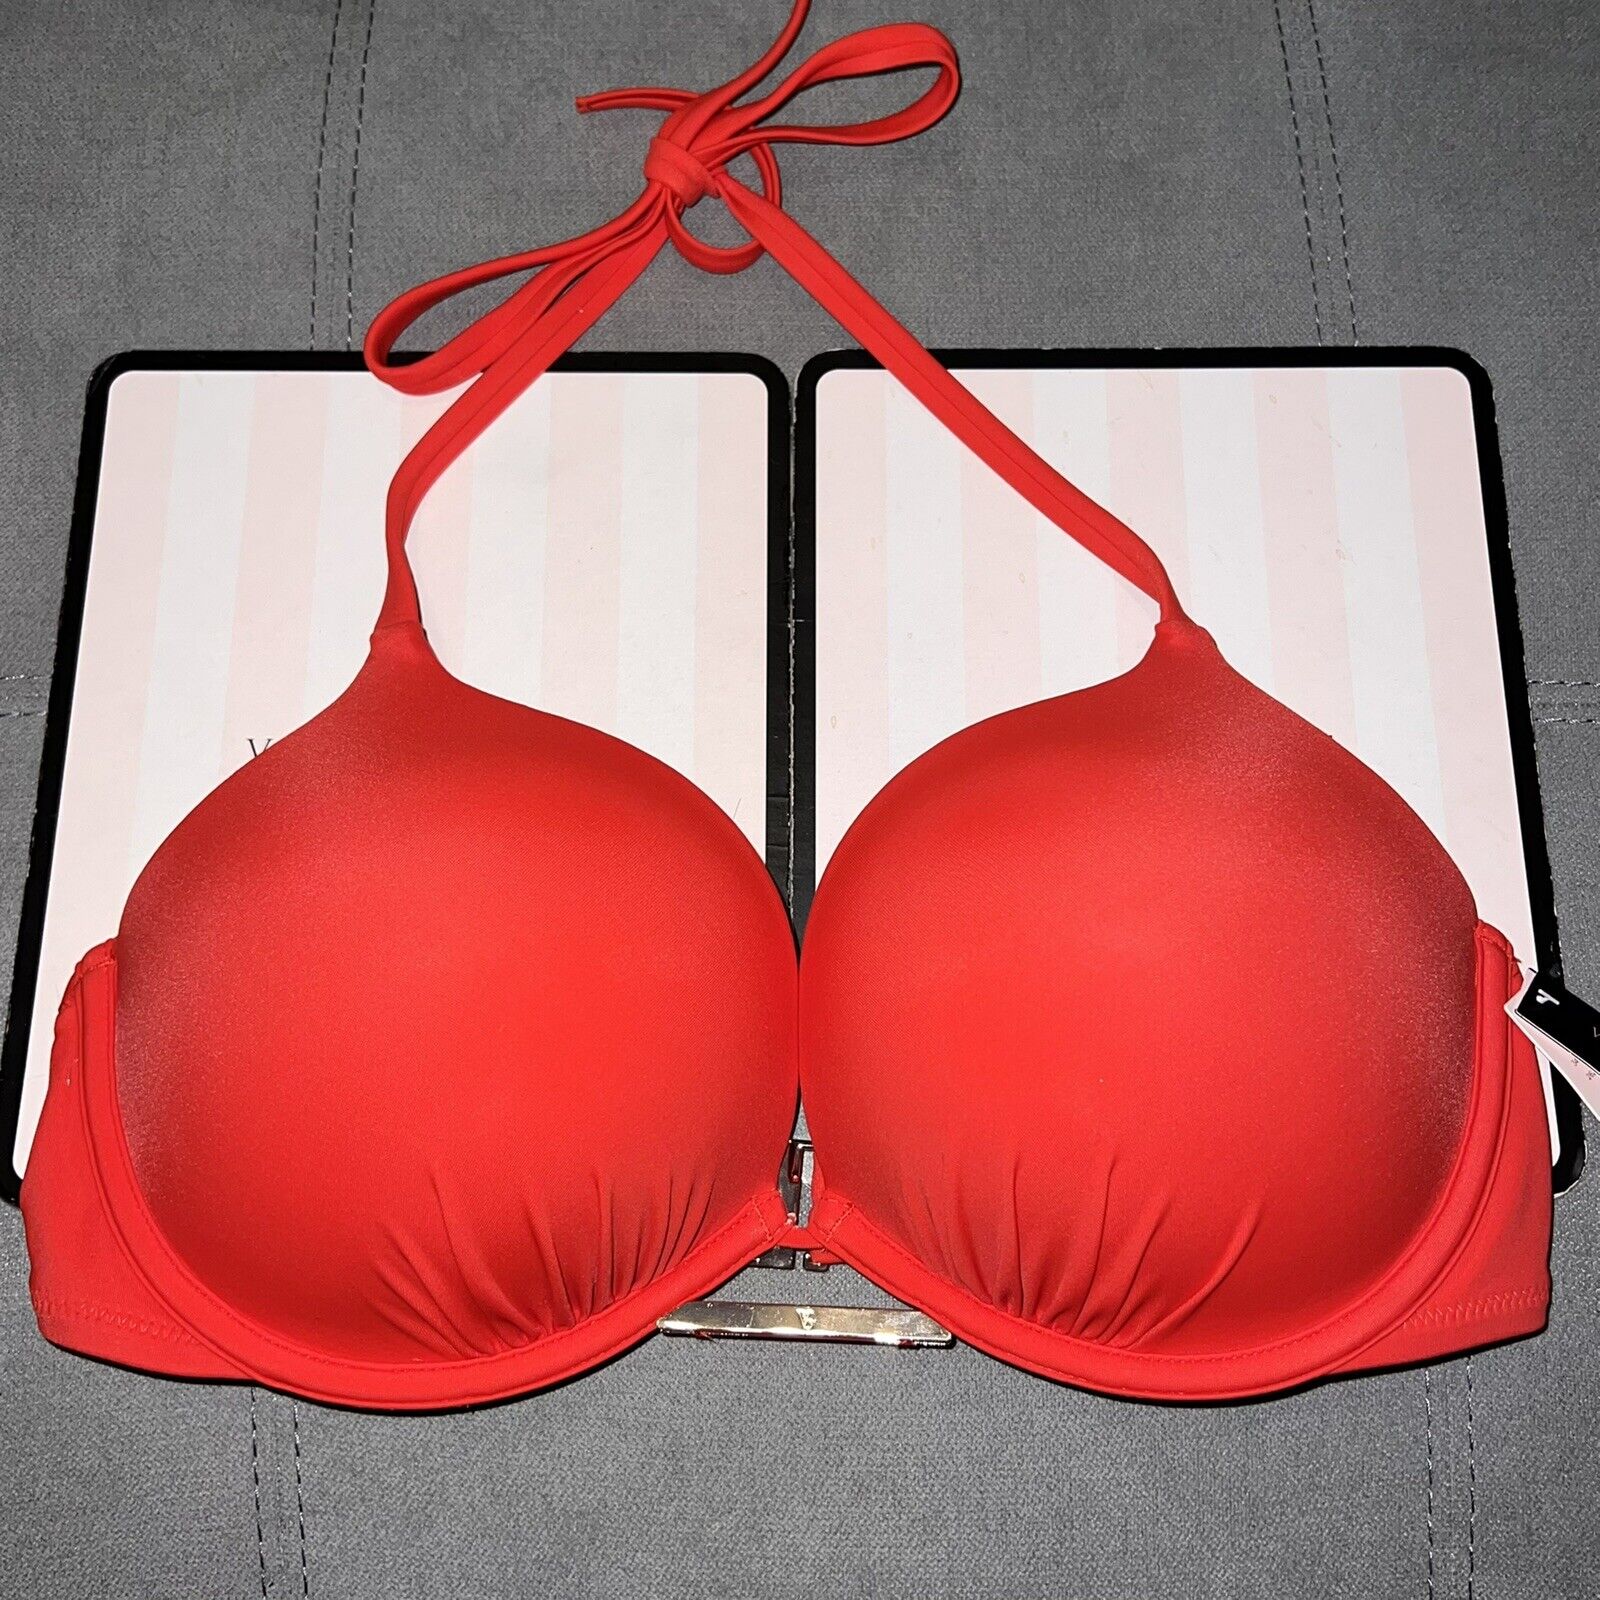 Onvervangbaar Lima Uitbreiding Victoria's Secret 38C Bombshell Miraculous Plunge Bikini Add 2 Cup Size  Push Up | eBay